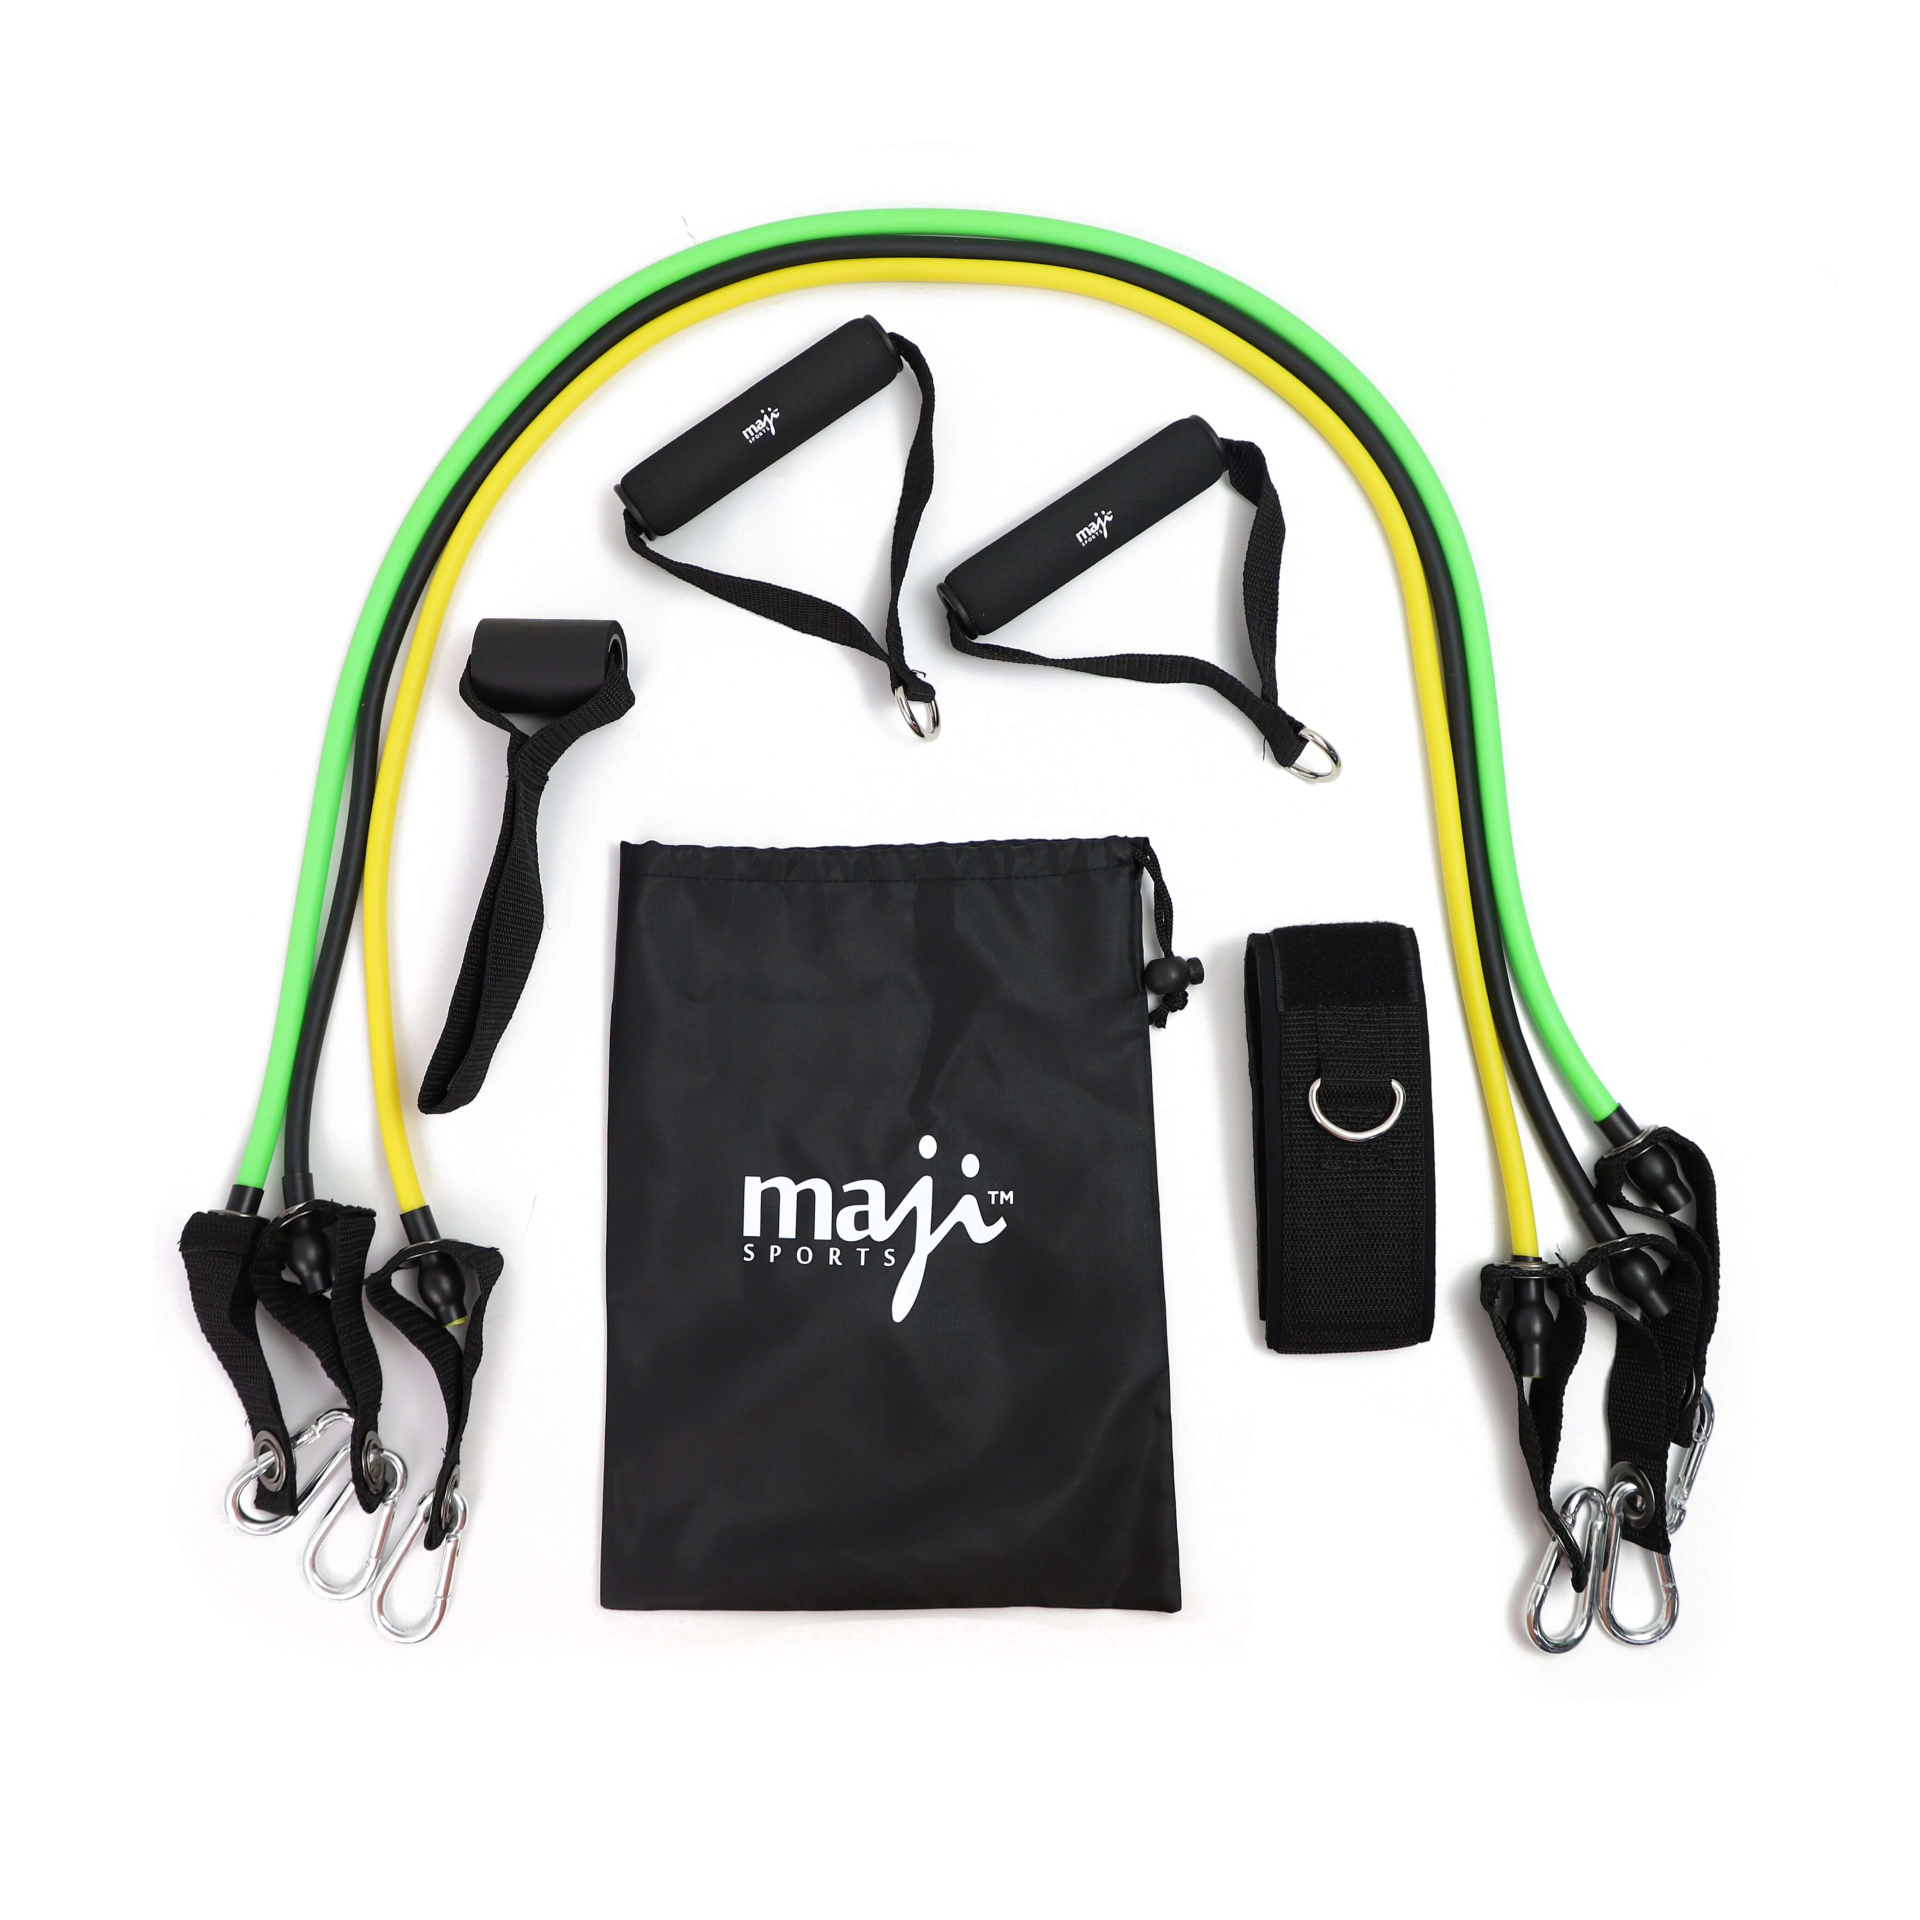 Maji Sports Full-Body Resistance Training Workout Tube Kit